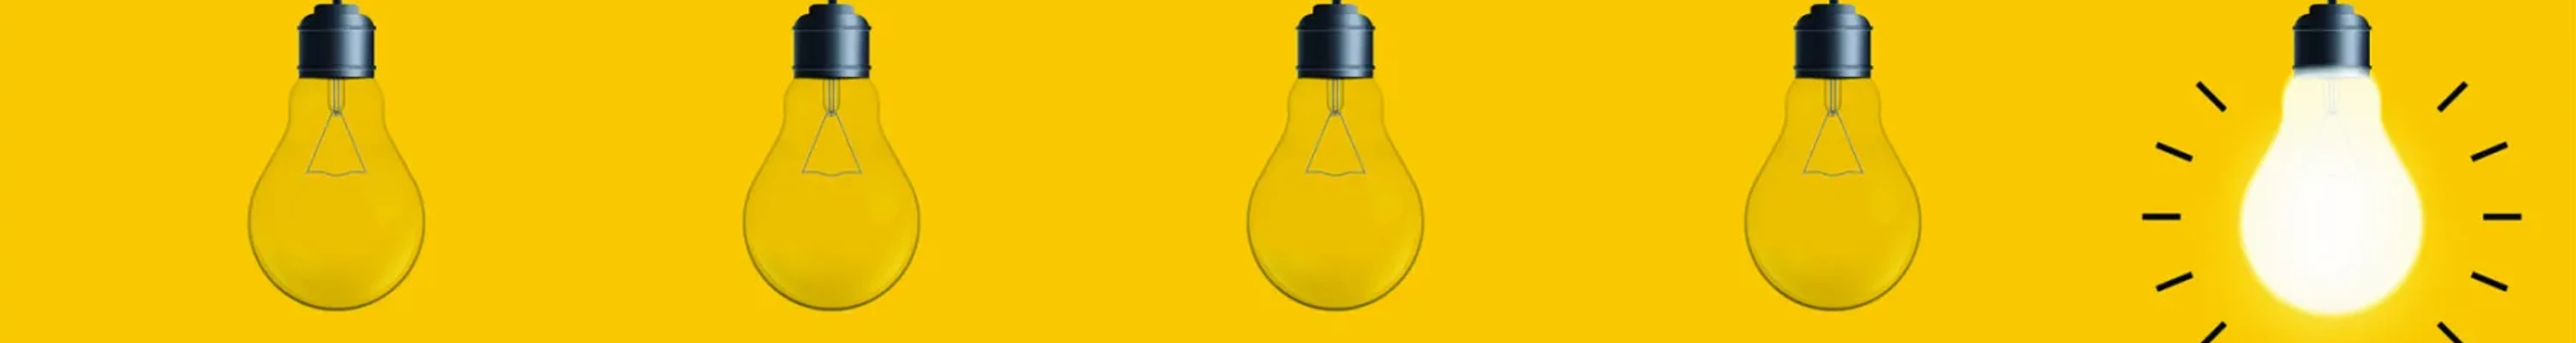 lightbulbs simplicity